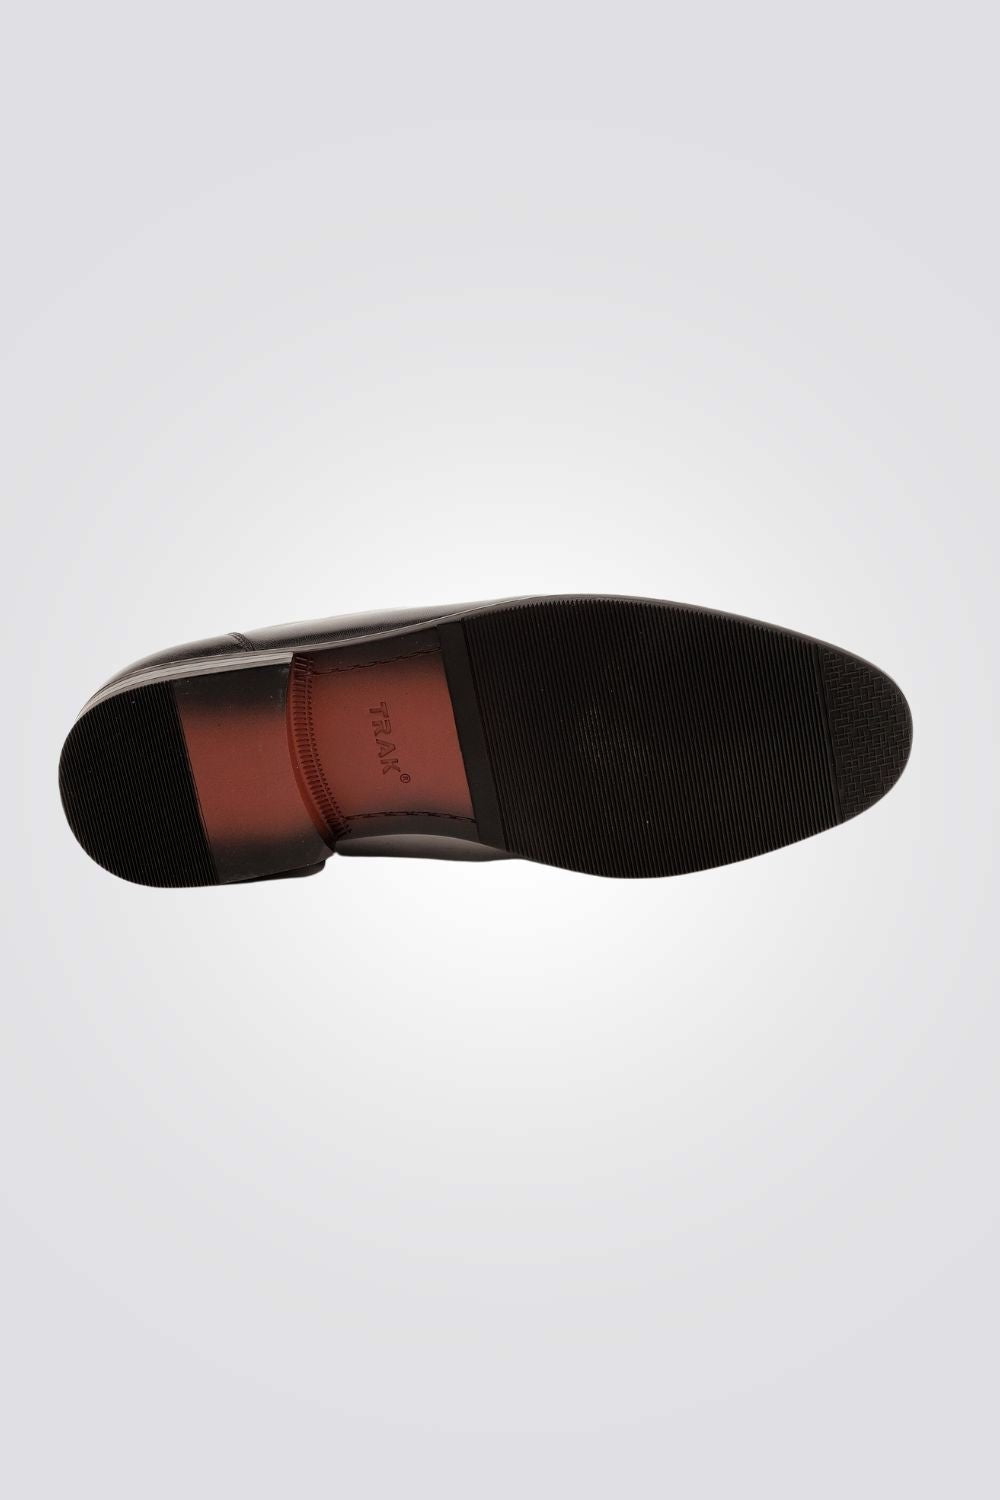 TRAK - נעל עור אלגנט צבע שחור דגם ארז - MASHBIR//365